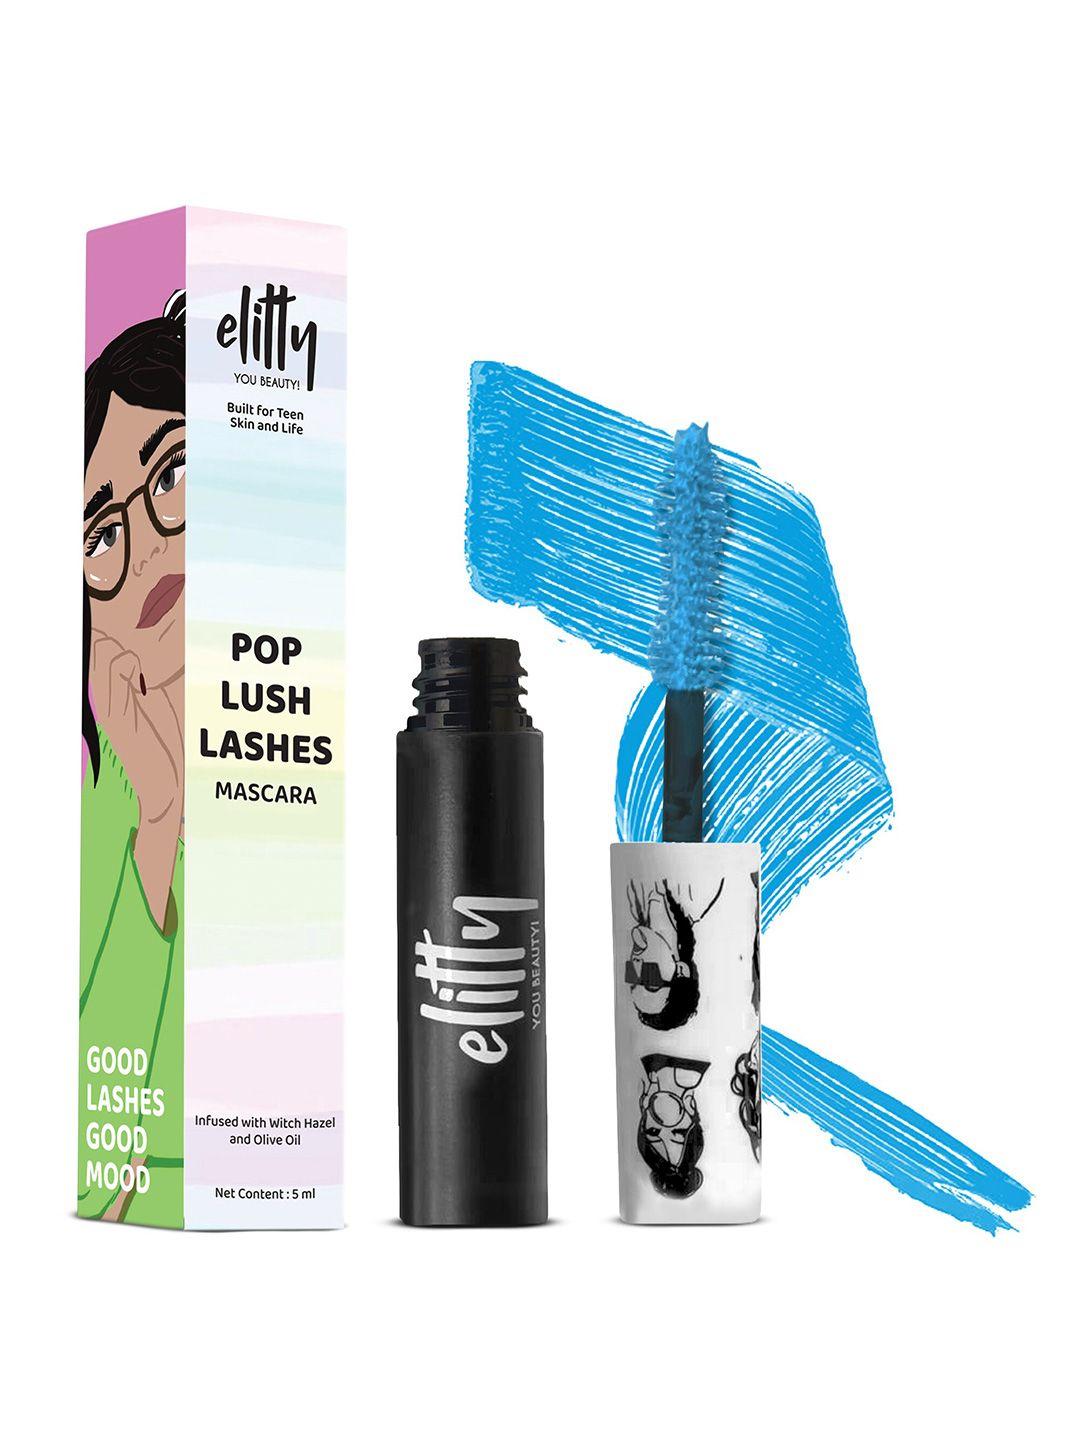 elitty pop lush lashes mascara - 5g - it's giving